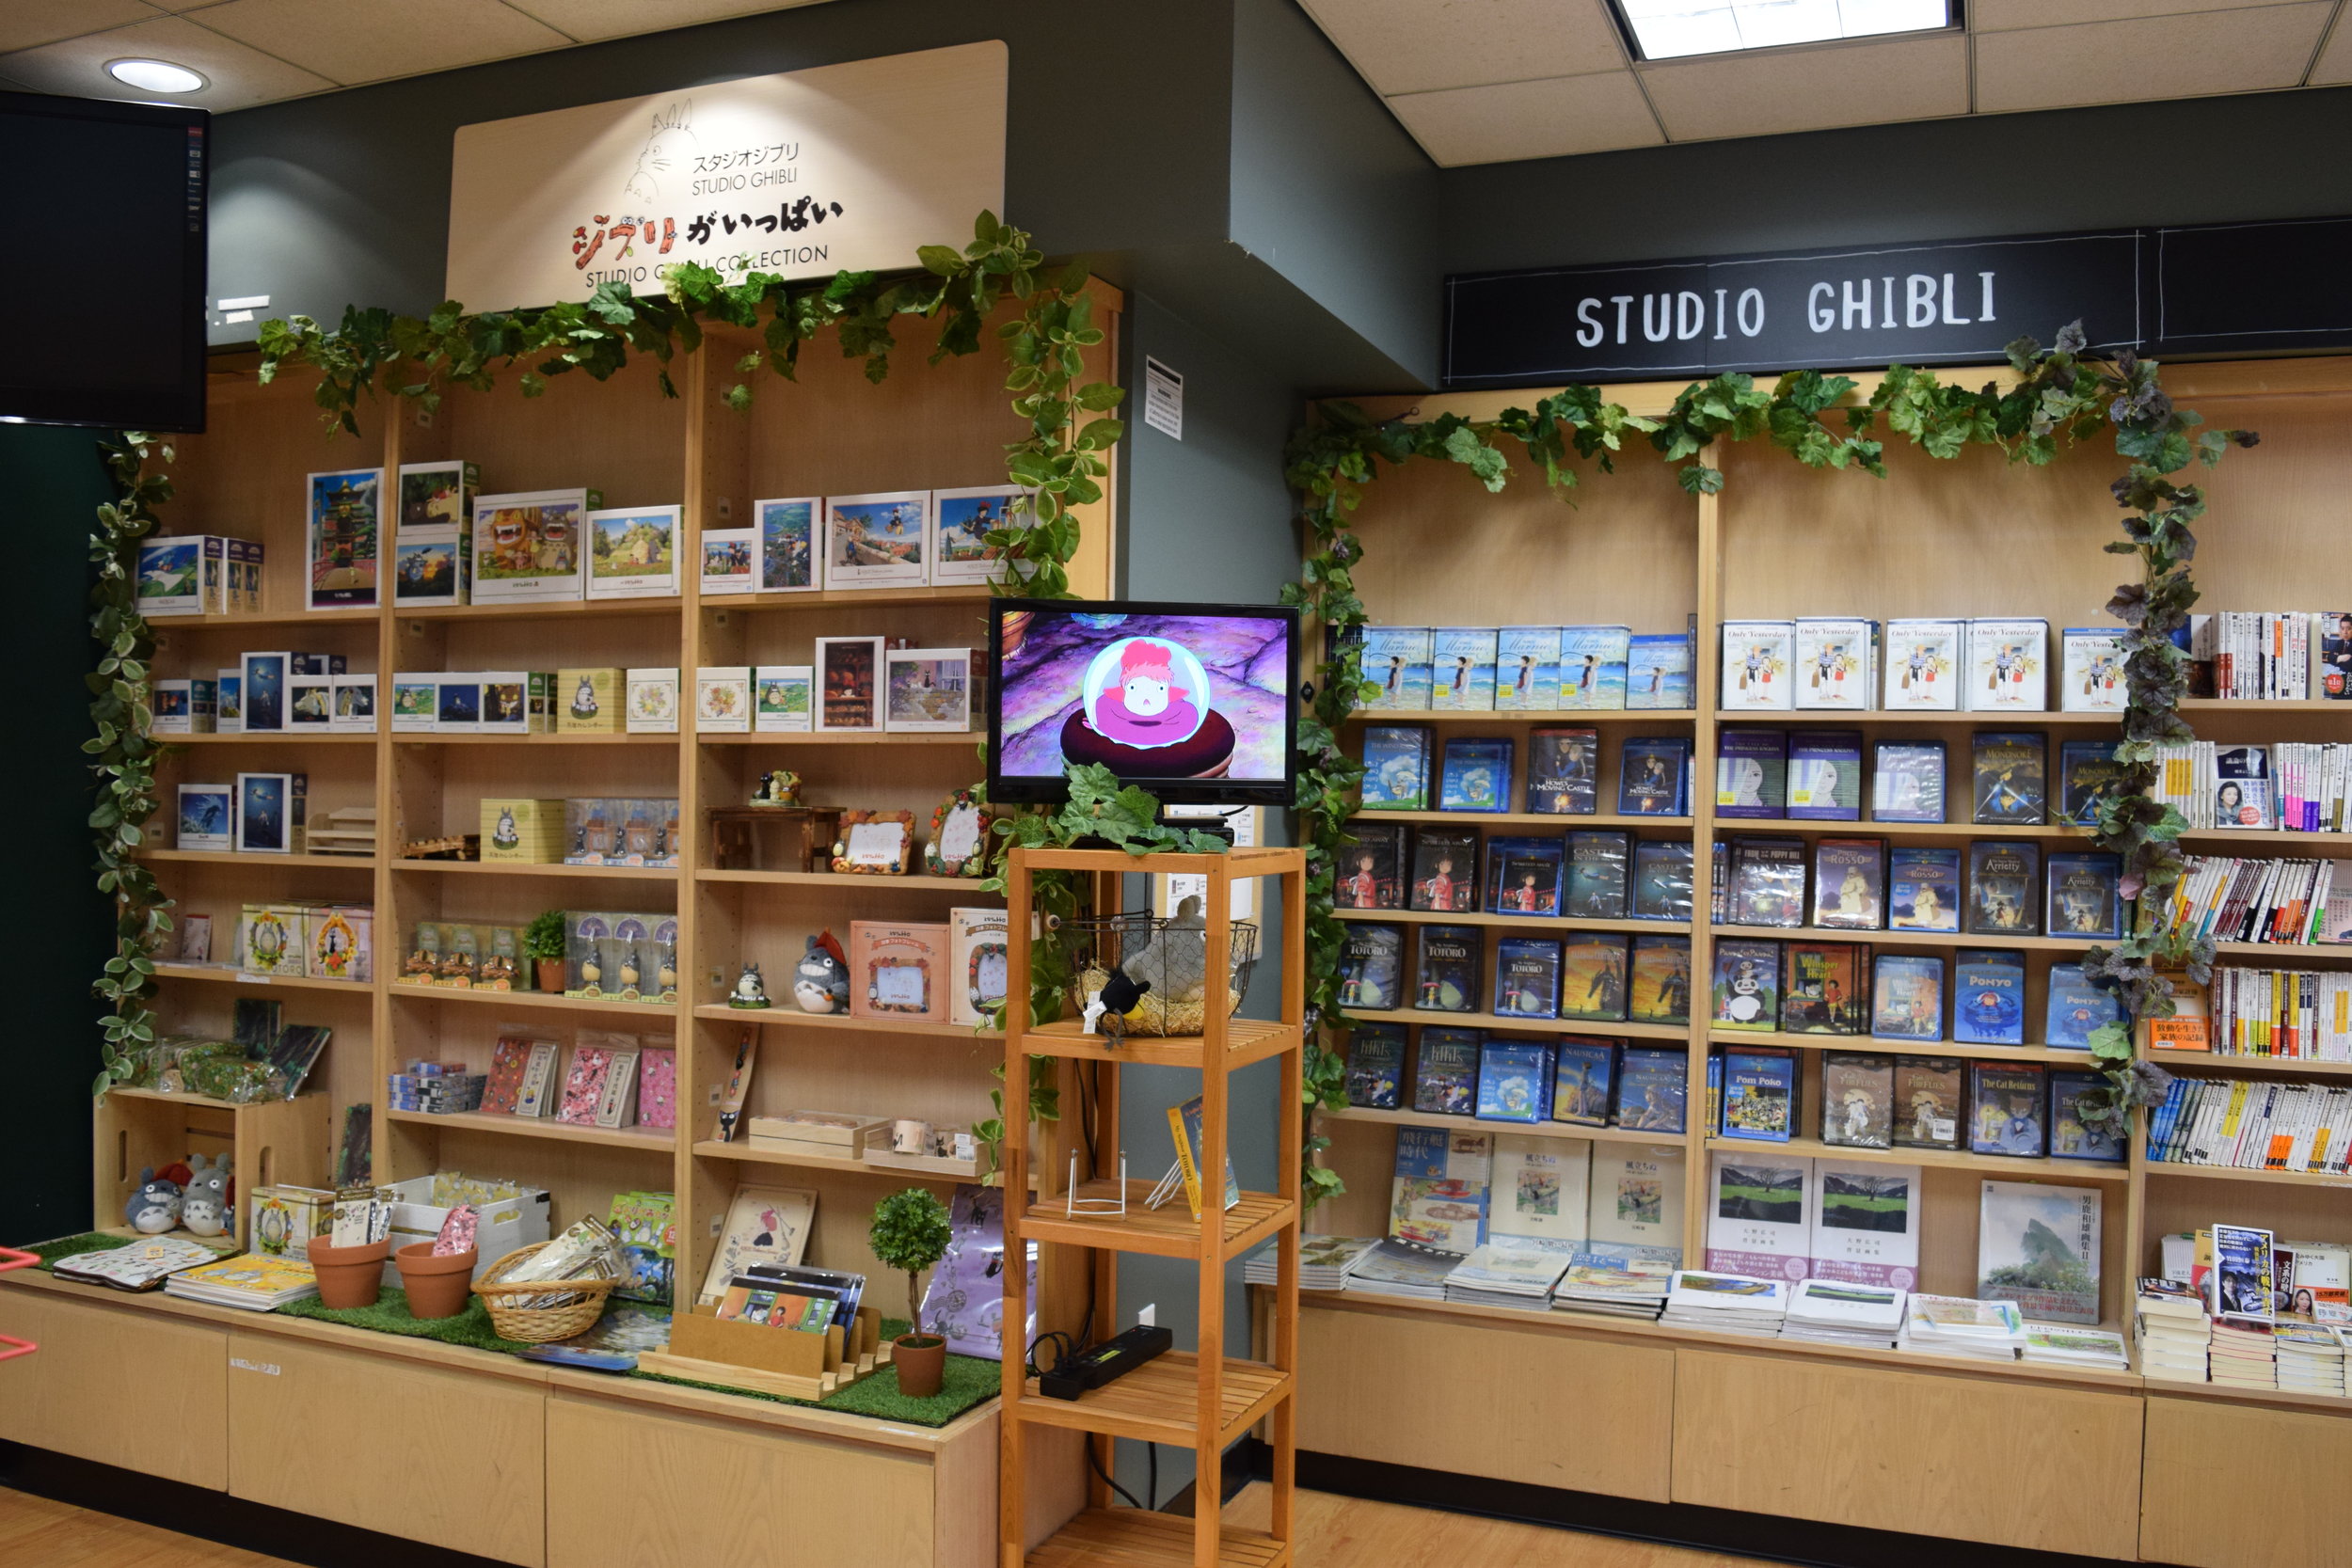 Ghibli Merch - Official store for Studio Ghibli merchandise